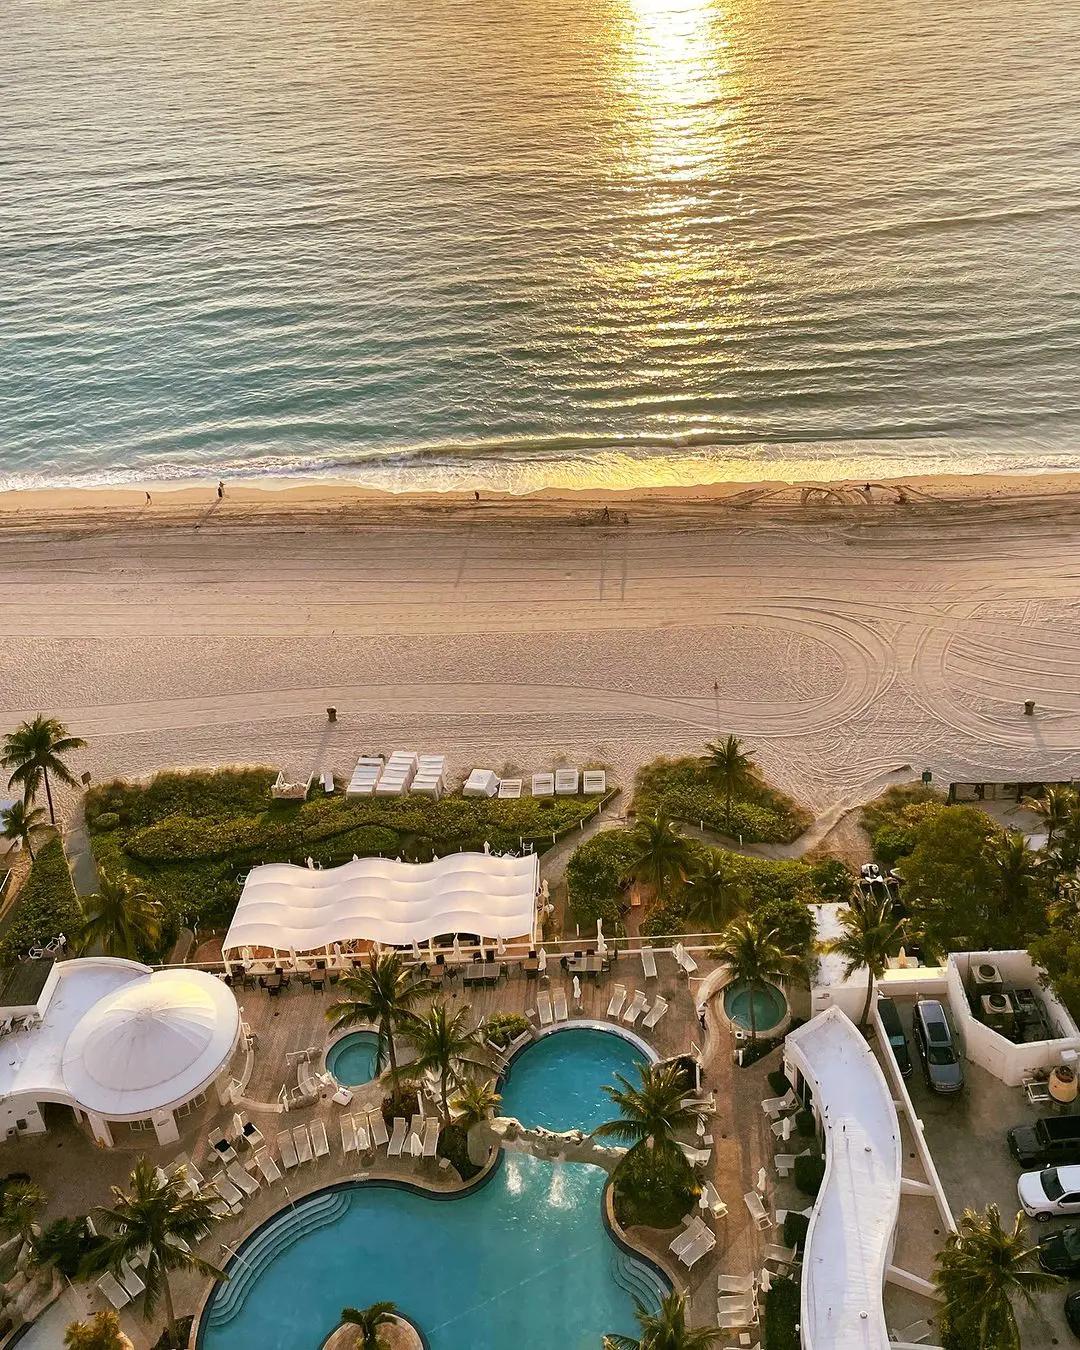 Trump International Beach Resort has a best ocean front beach venue for weddings